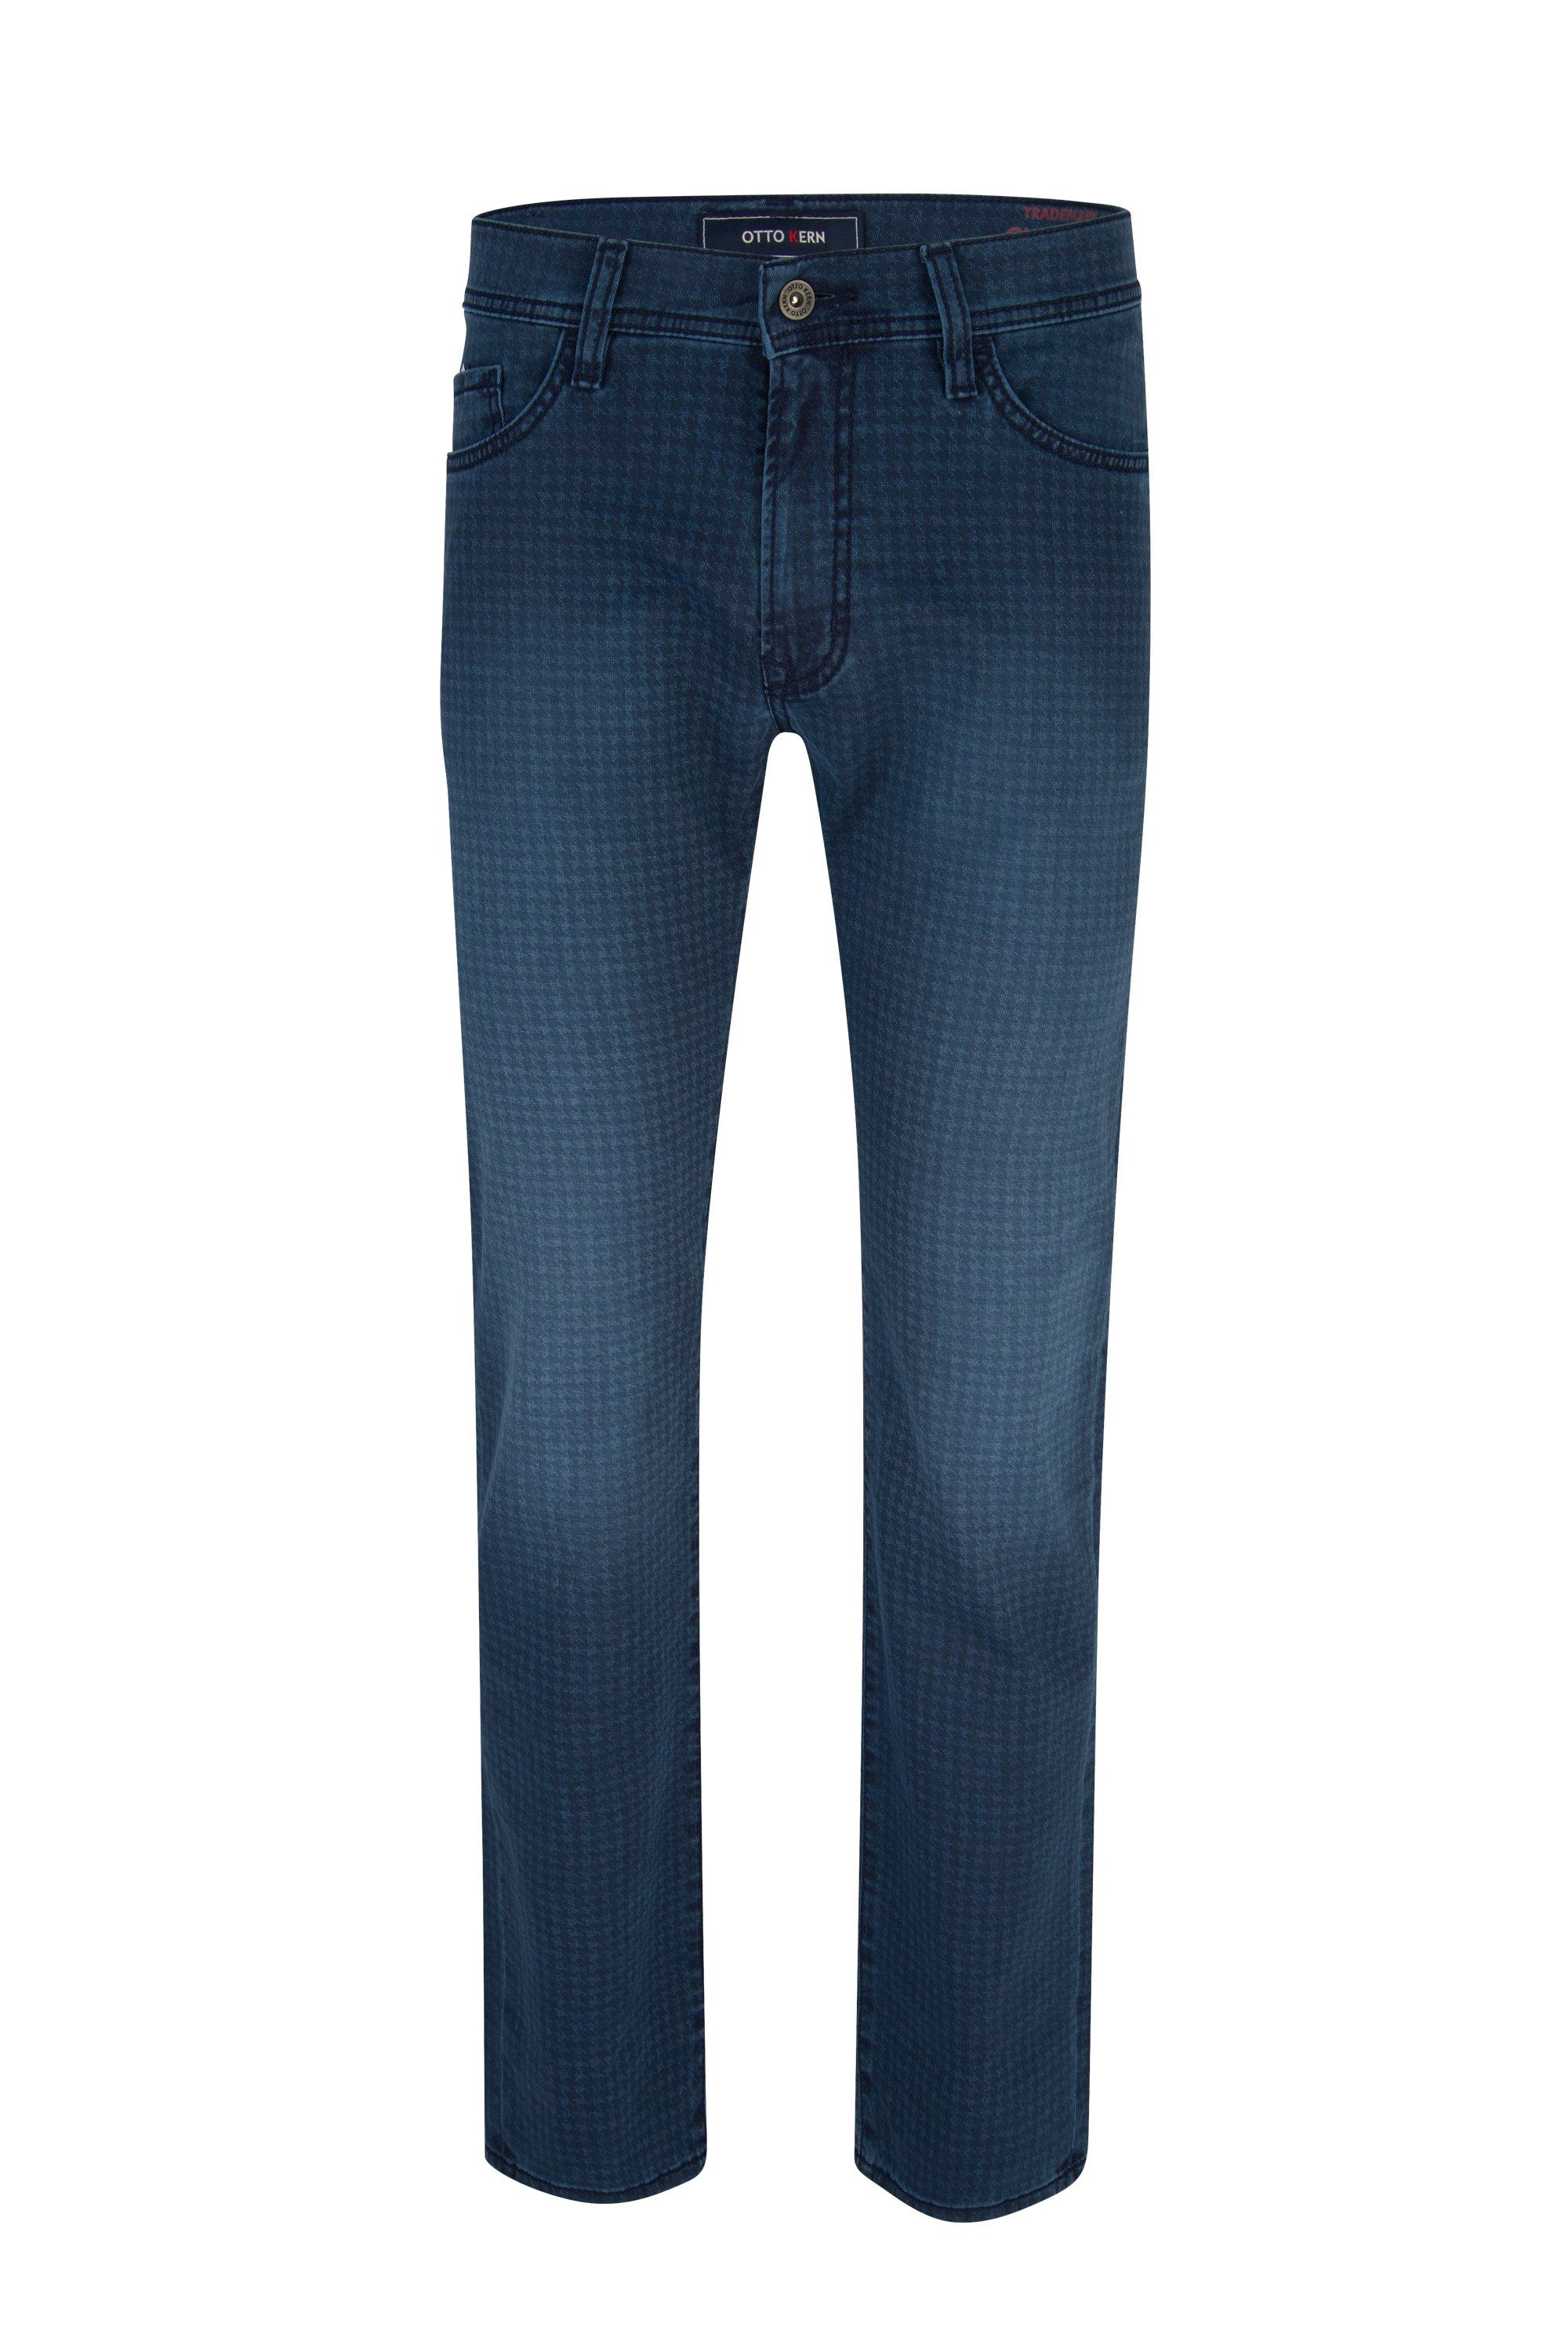  Kern 5-Pocket-Jeans OTTO KERN JOHN blue used patterned 67042 6700.6822